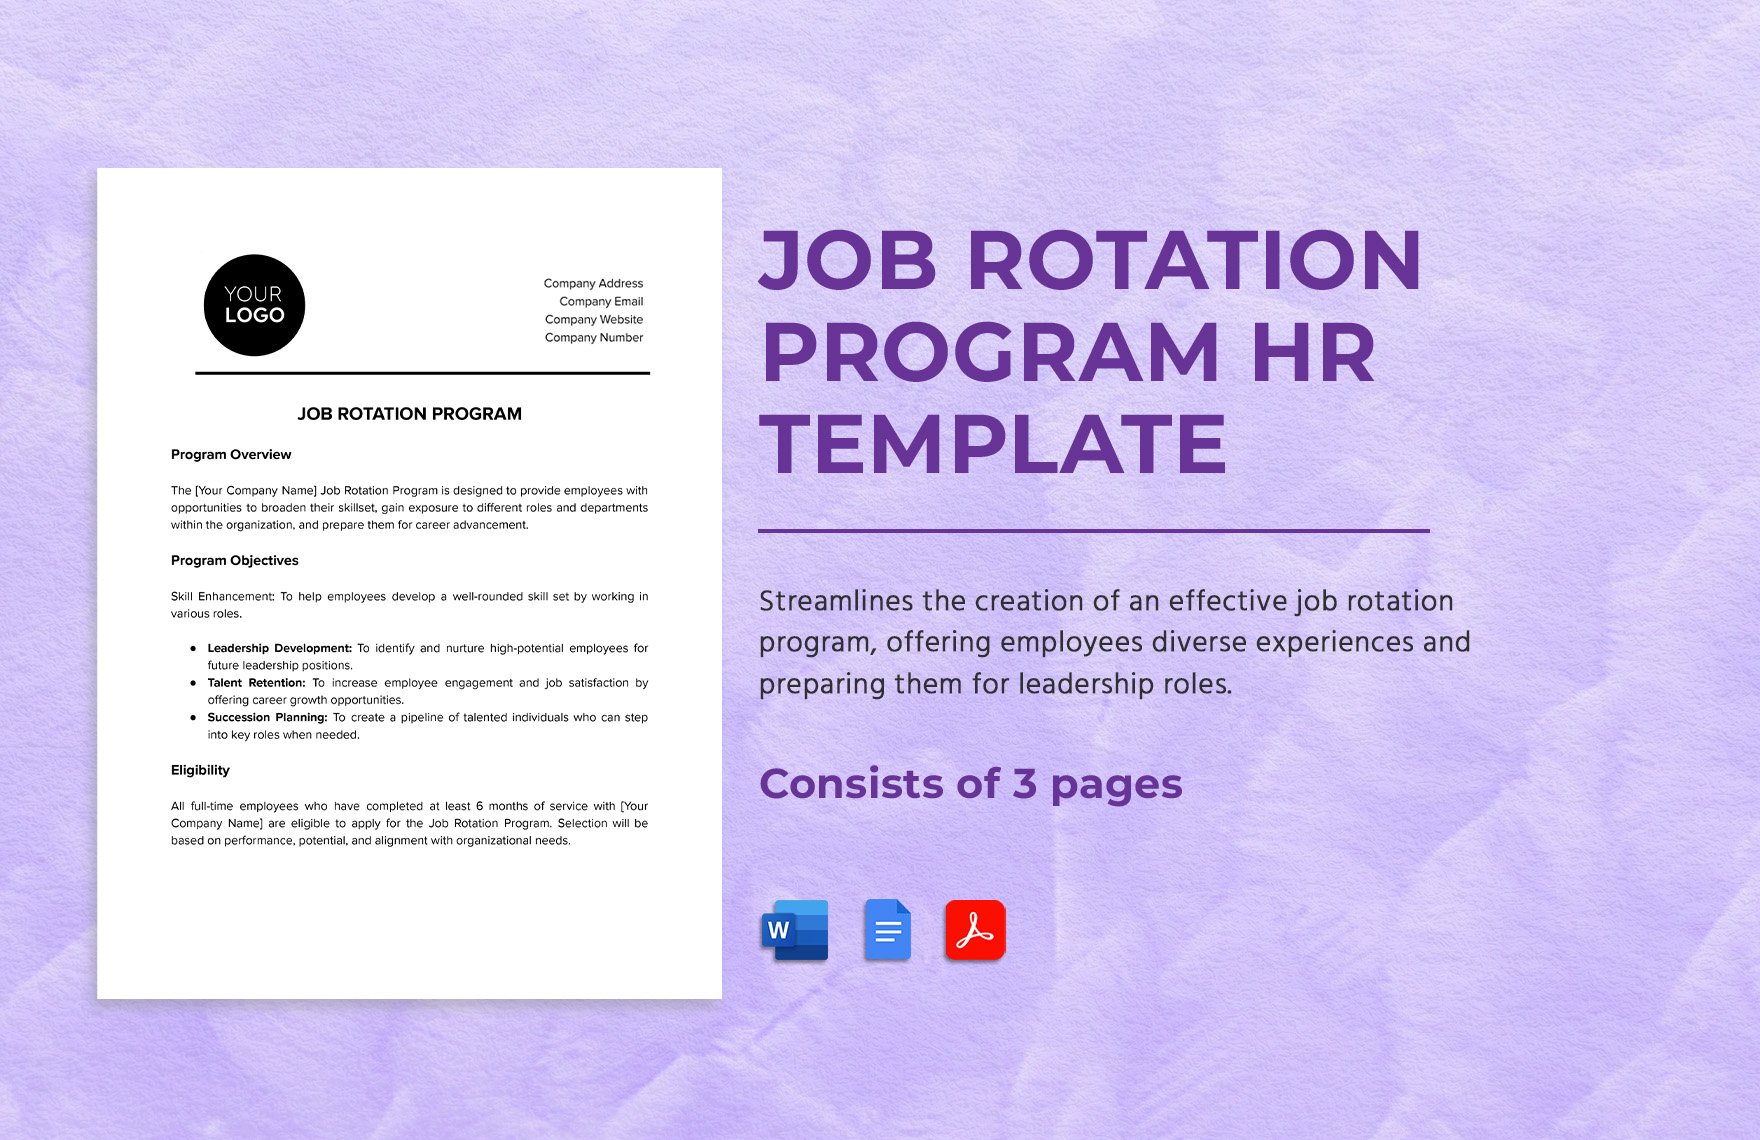 Job Rotation Program HR Template in Word, Google Docs, PDF